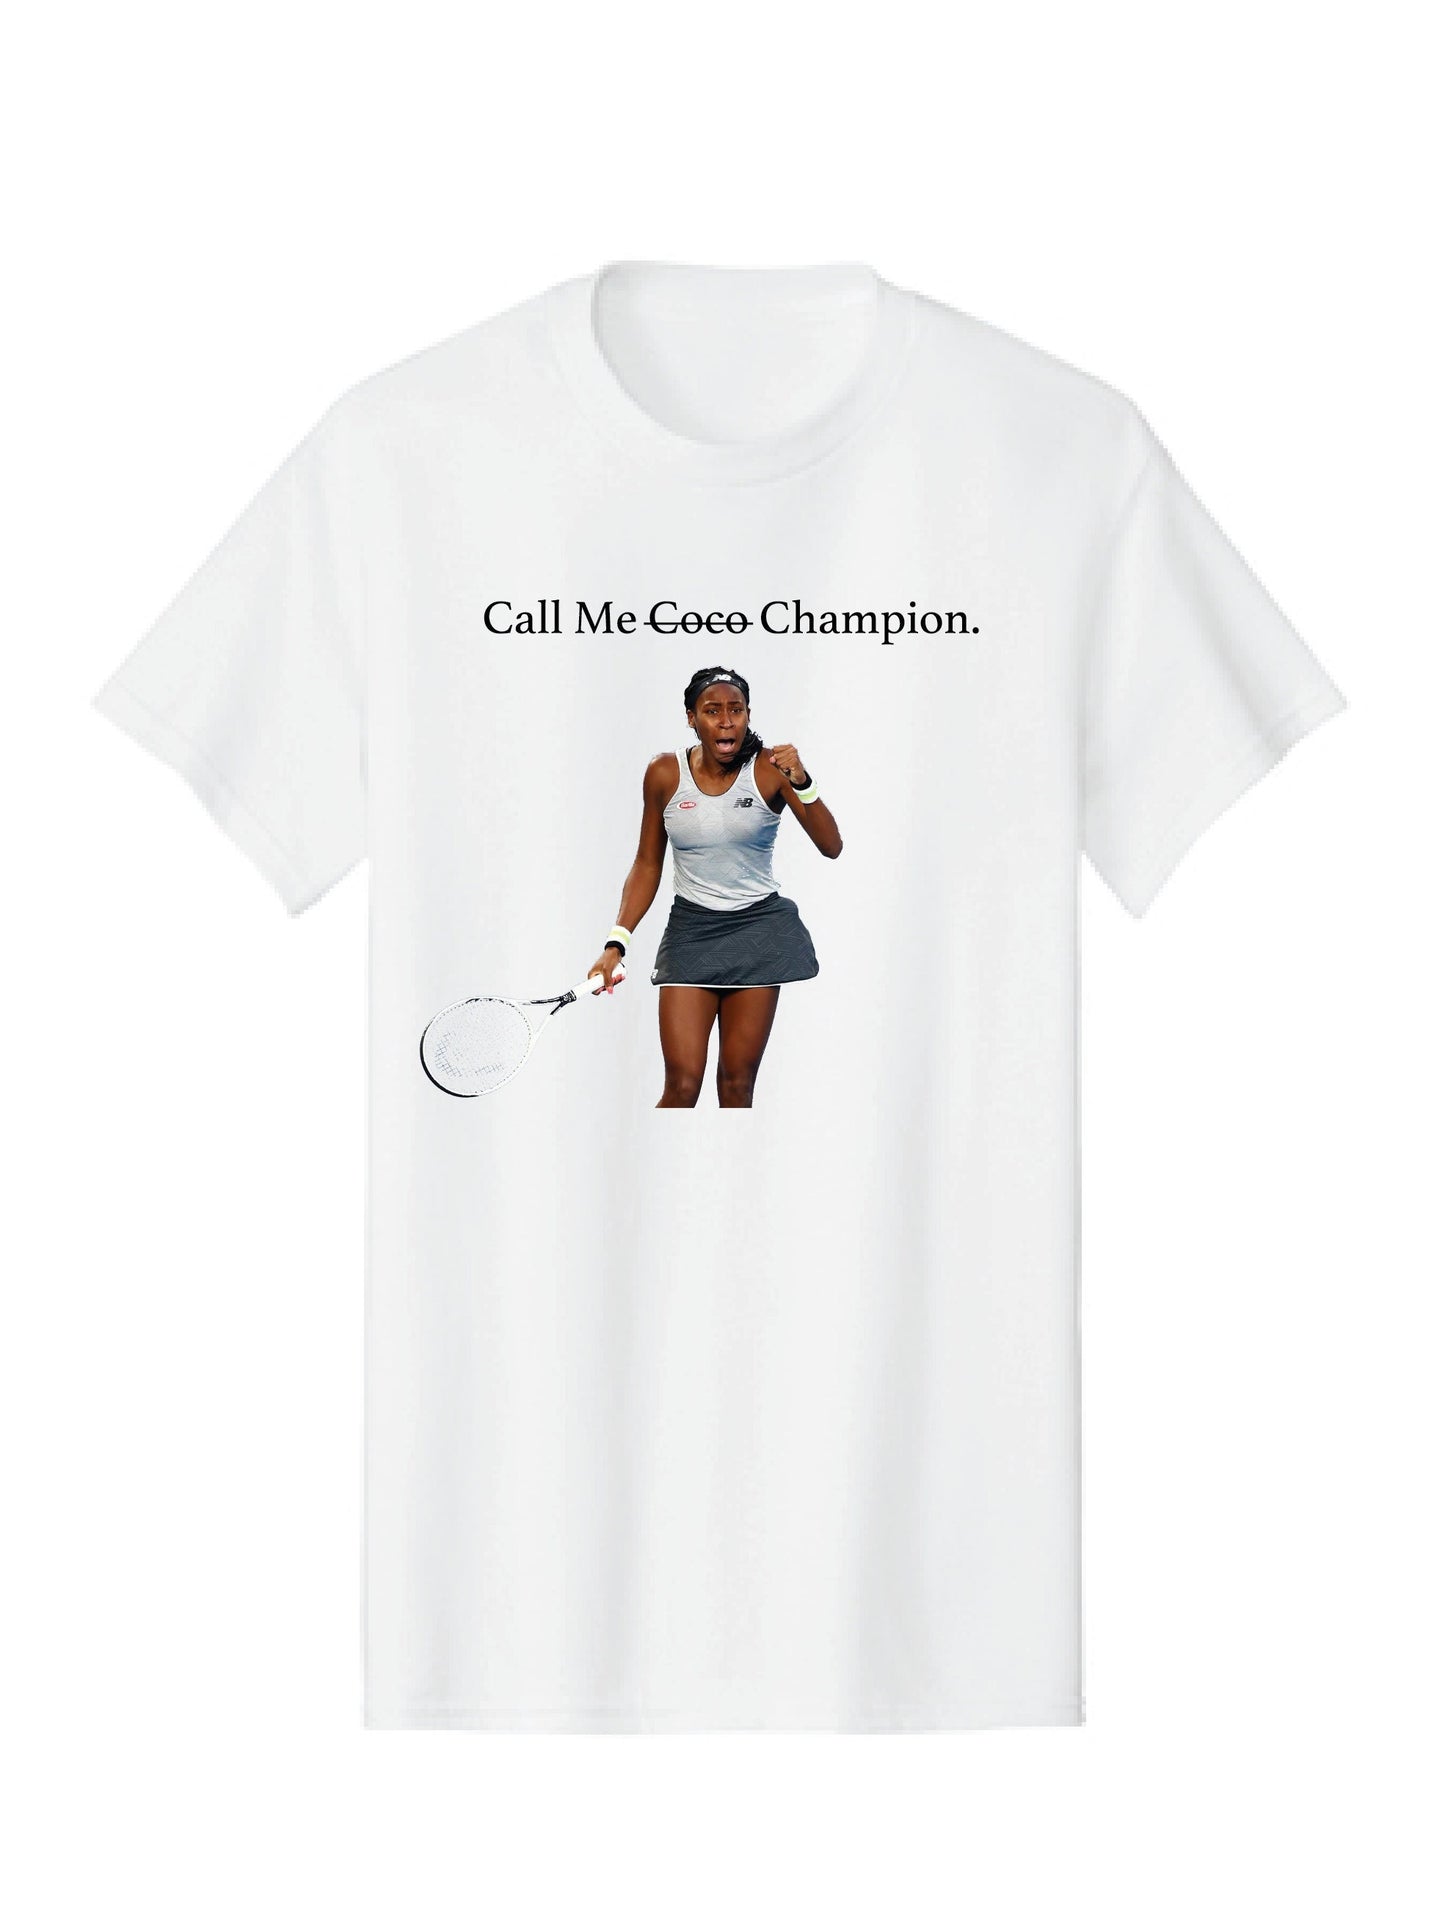 Coco Gauff tee | Call Me Coco Tee | US Open Champion | US Open Women's Champion | Tennis Champion T-shirt